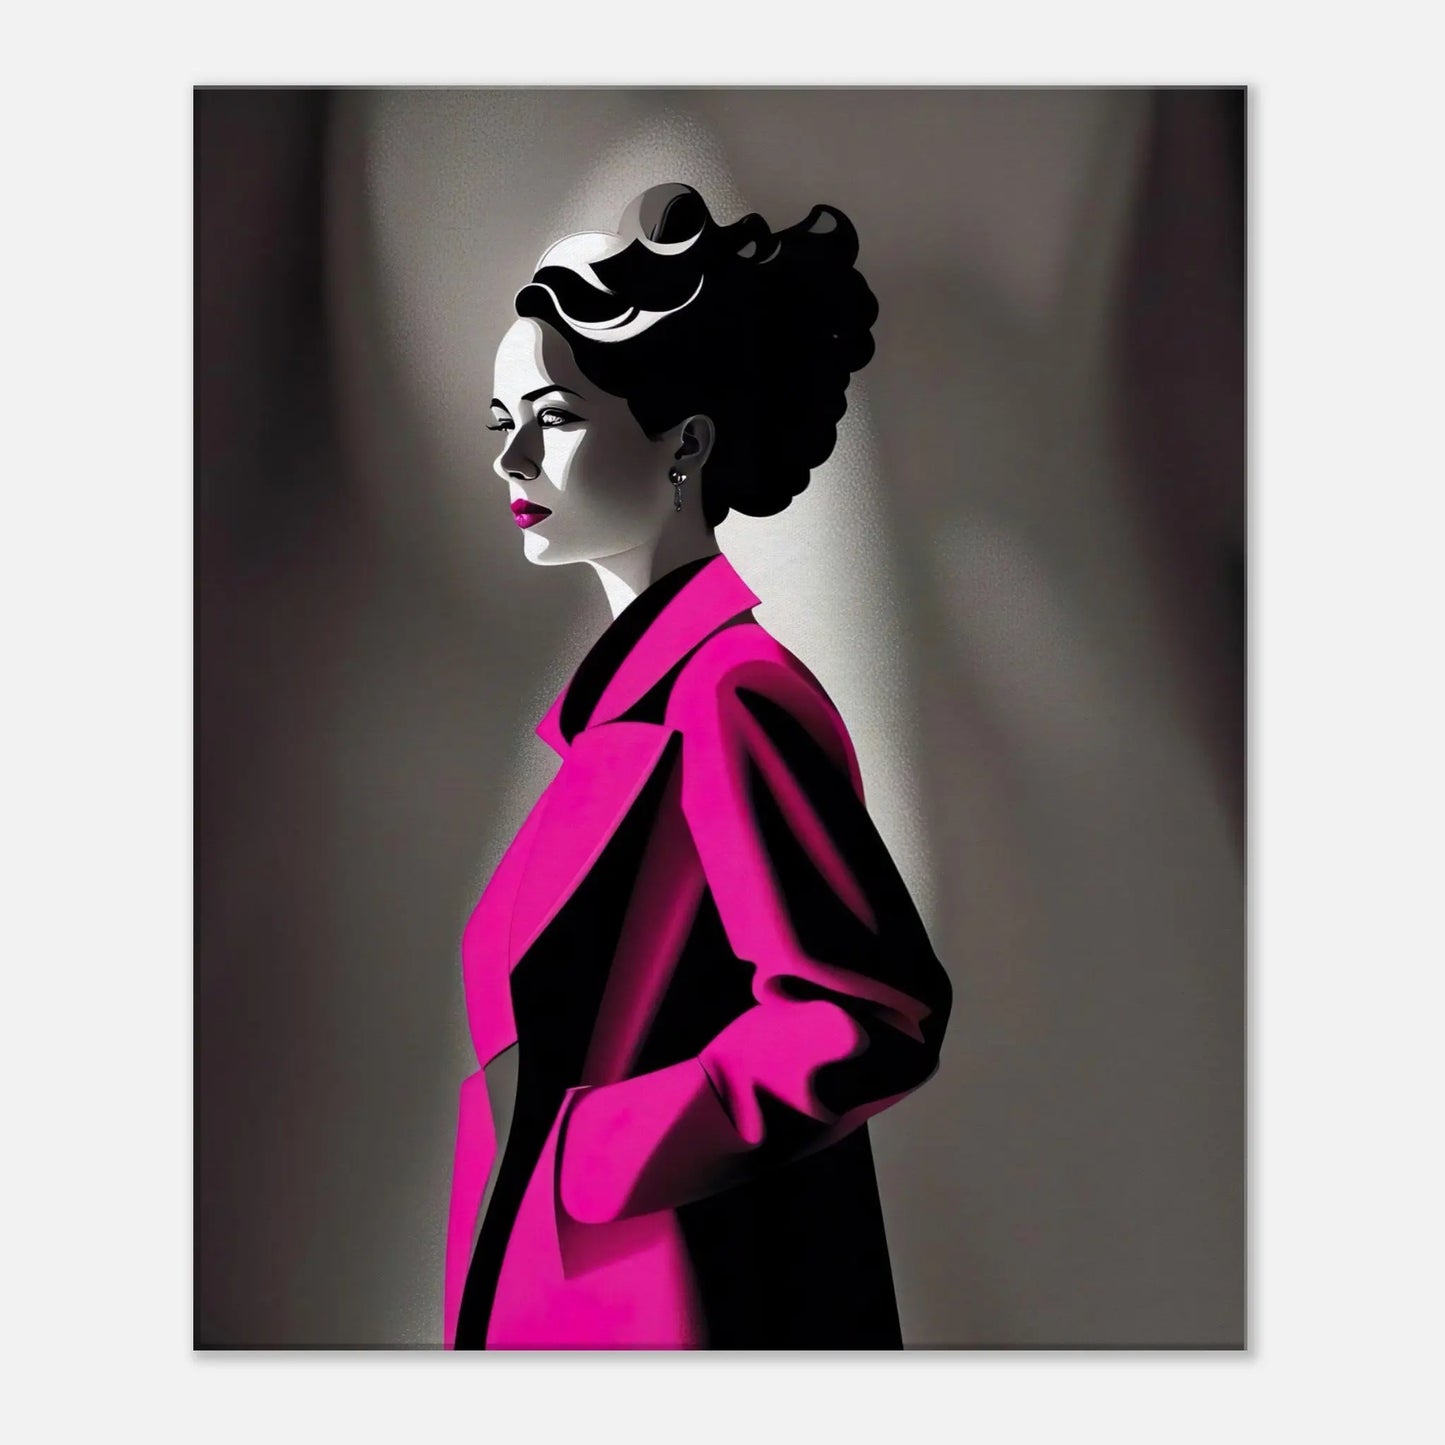 Leinwandbild - Frau im rosa Mantel - Schwarz-Weiß Stil, KI-Kunst - RolConArt, Schwarz-Weiß mit Akzentfarben, 50x60-cm-20x24